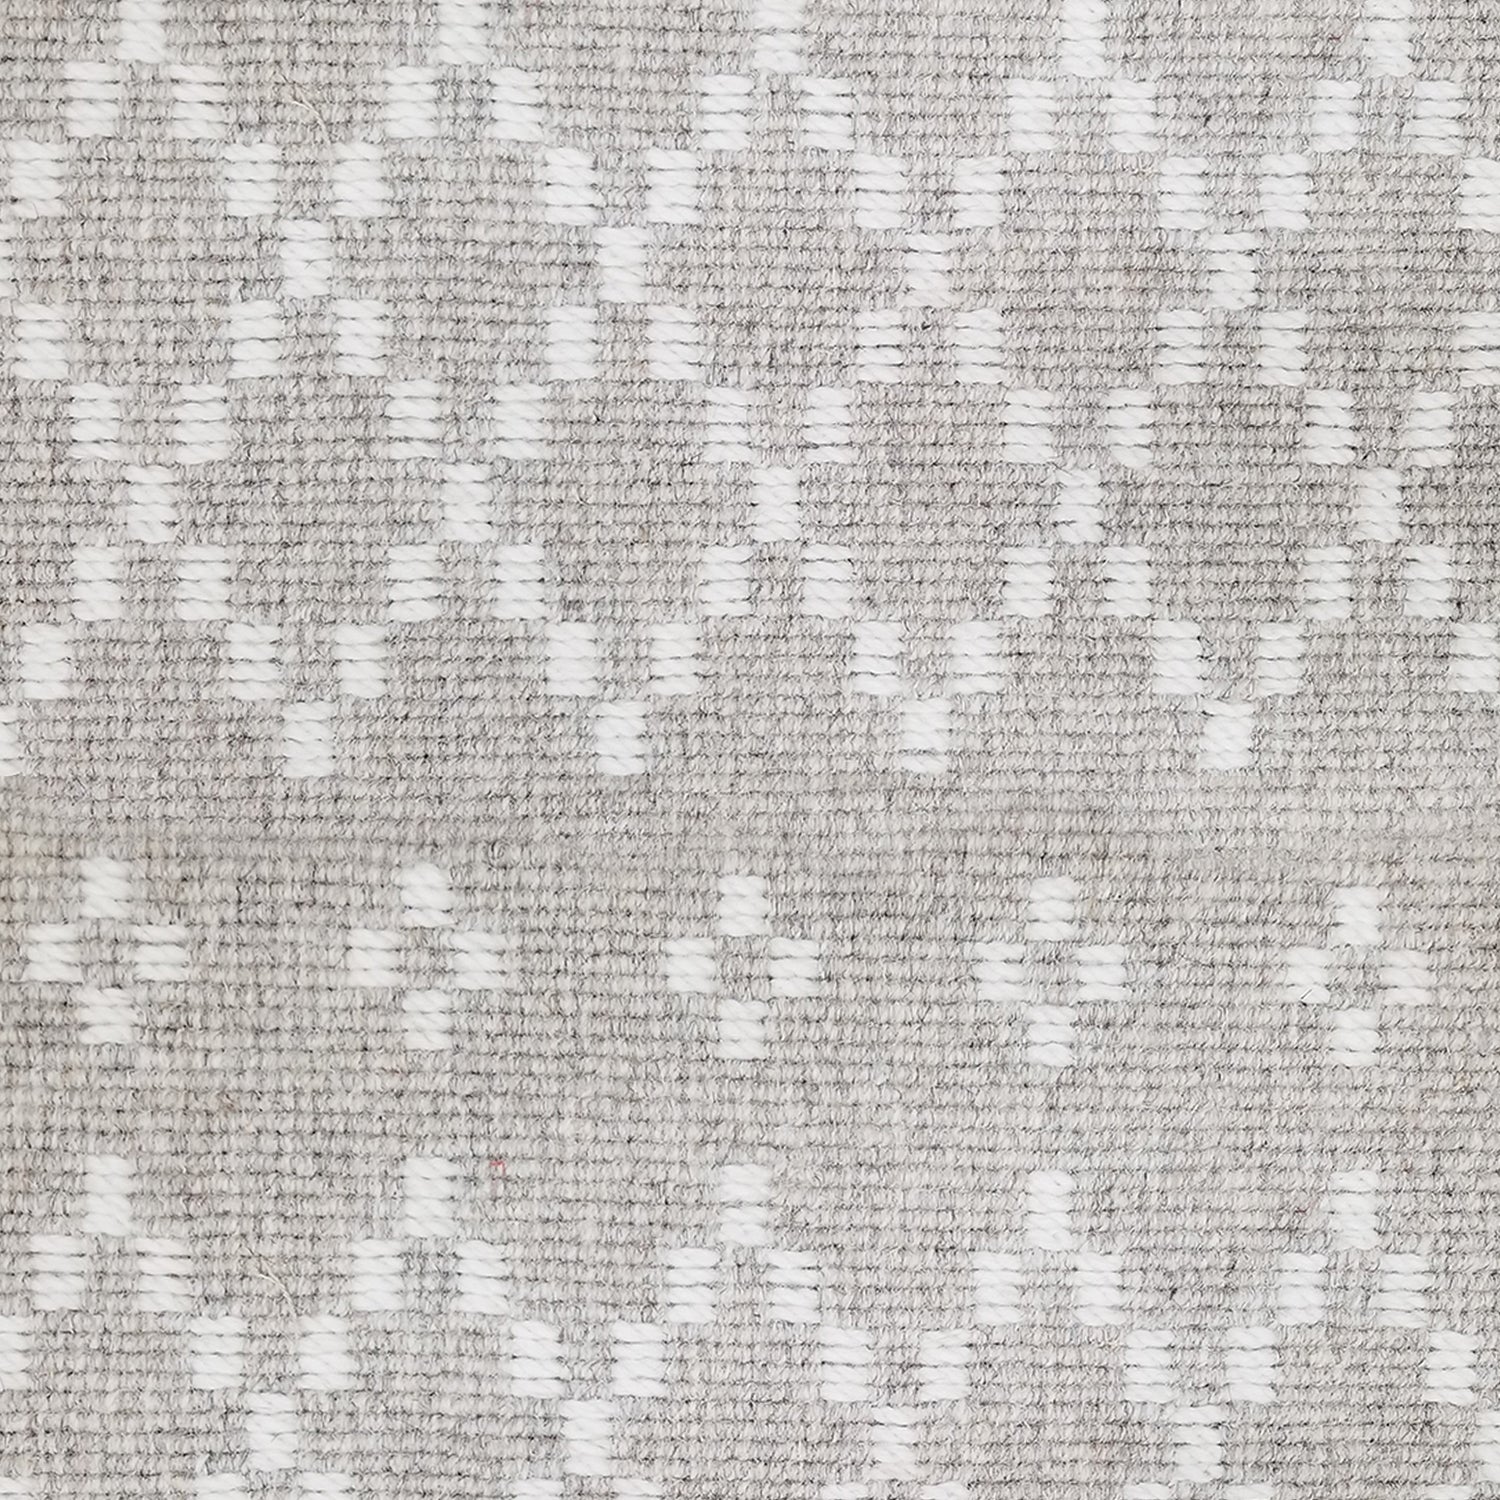 Wool broadloom carpet swatch in a repeating diamond print in cream on a silver field.